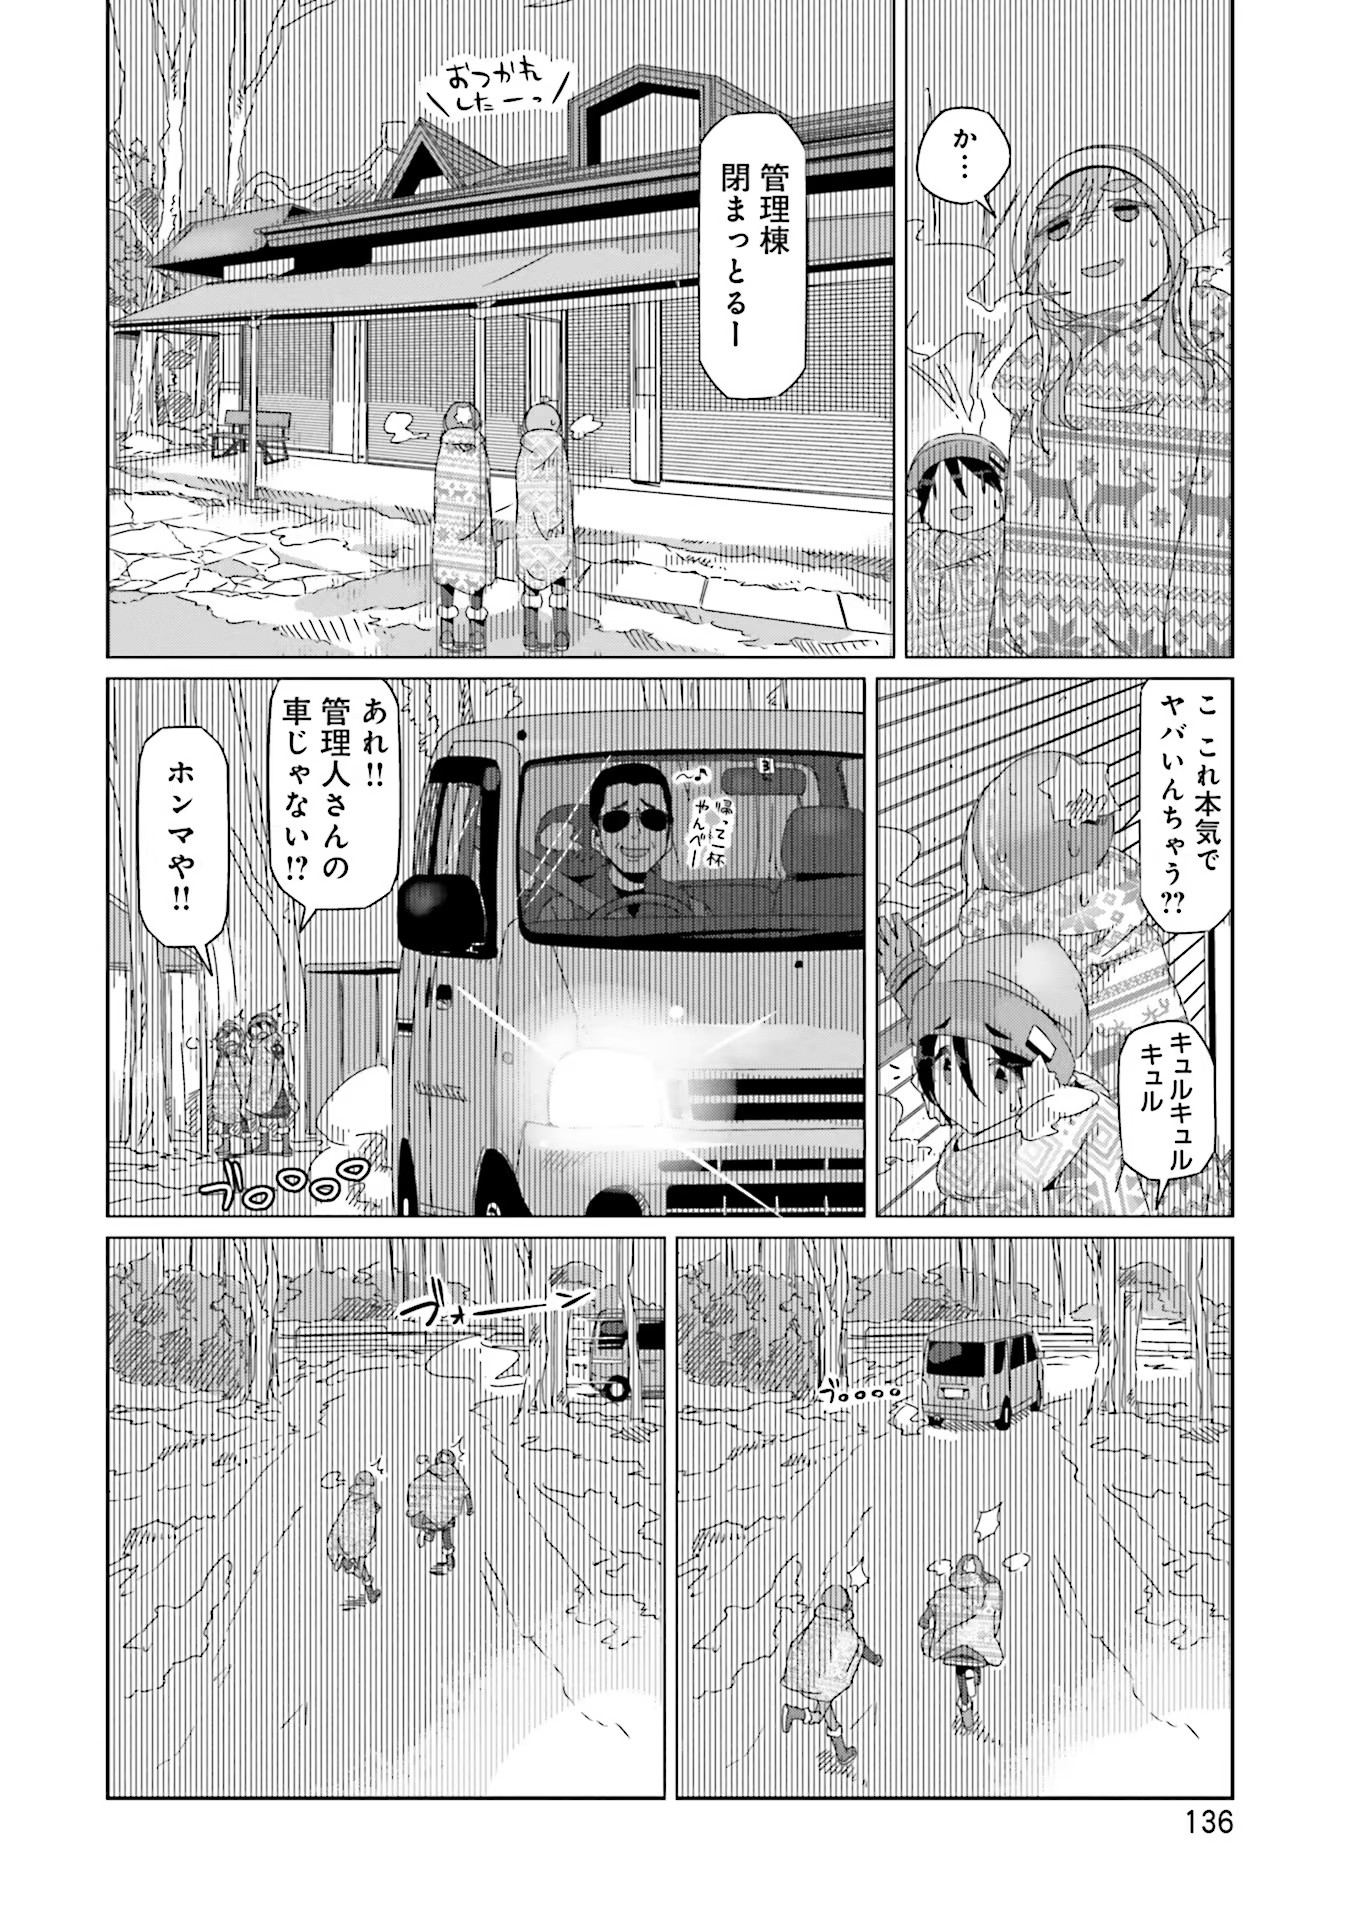 Yuru Camp - Chapter 34 - Page 4